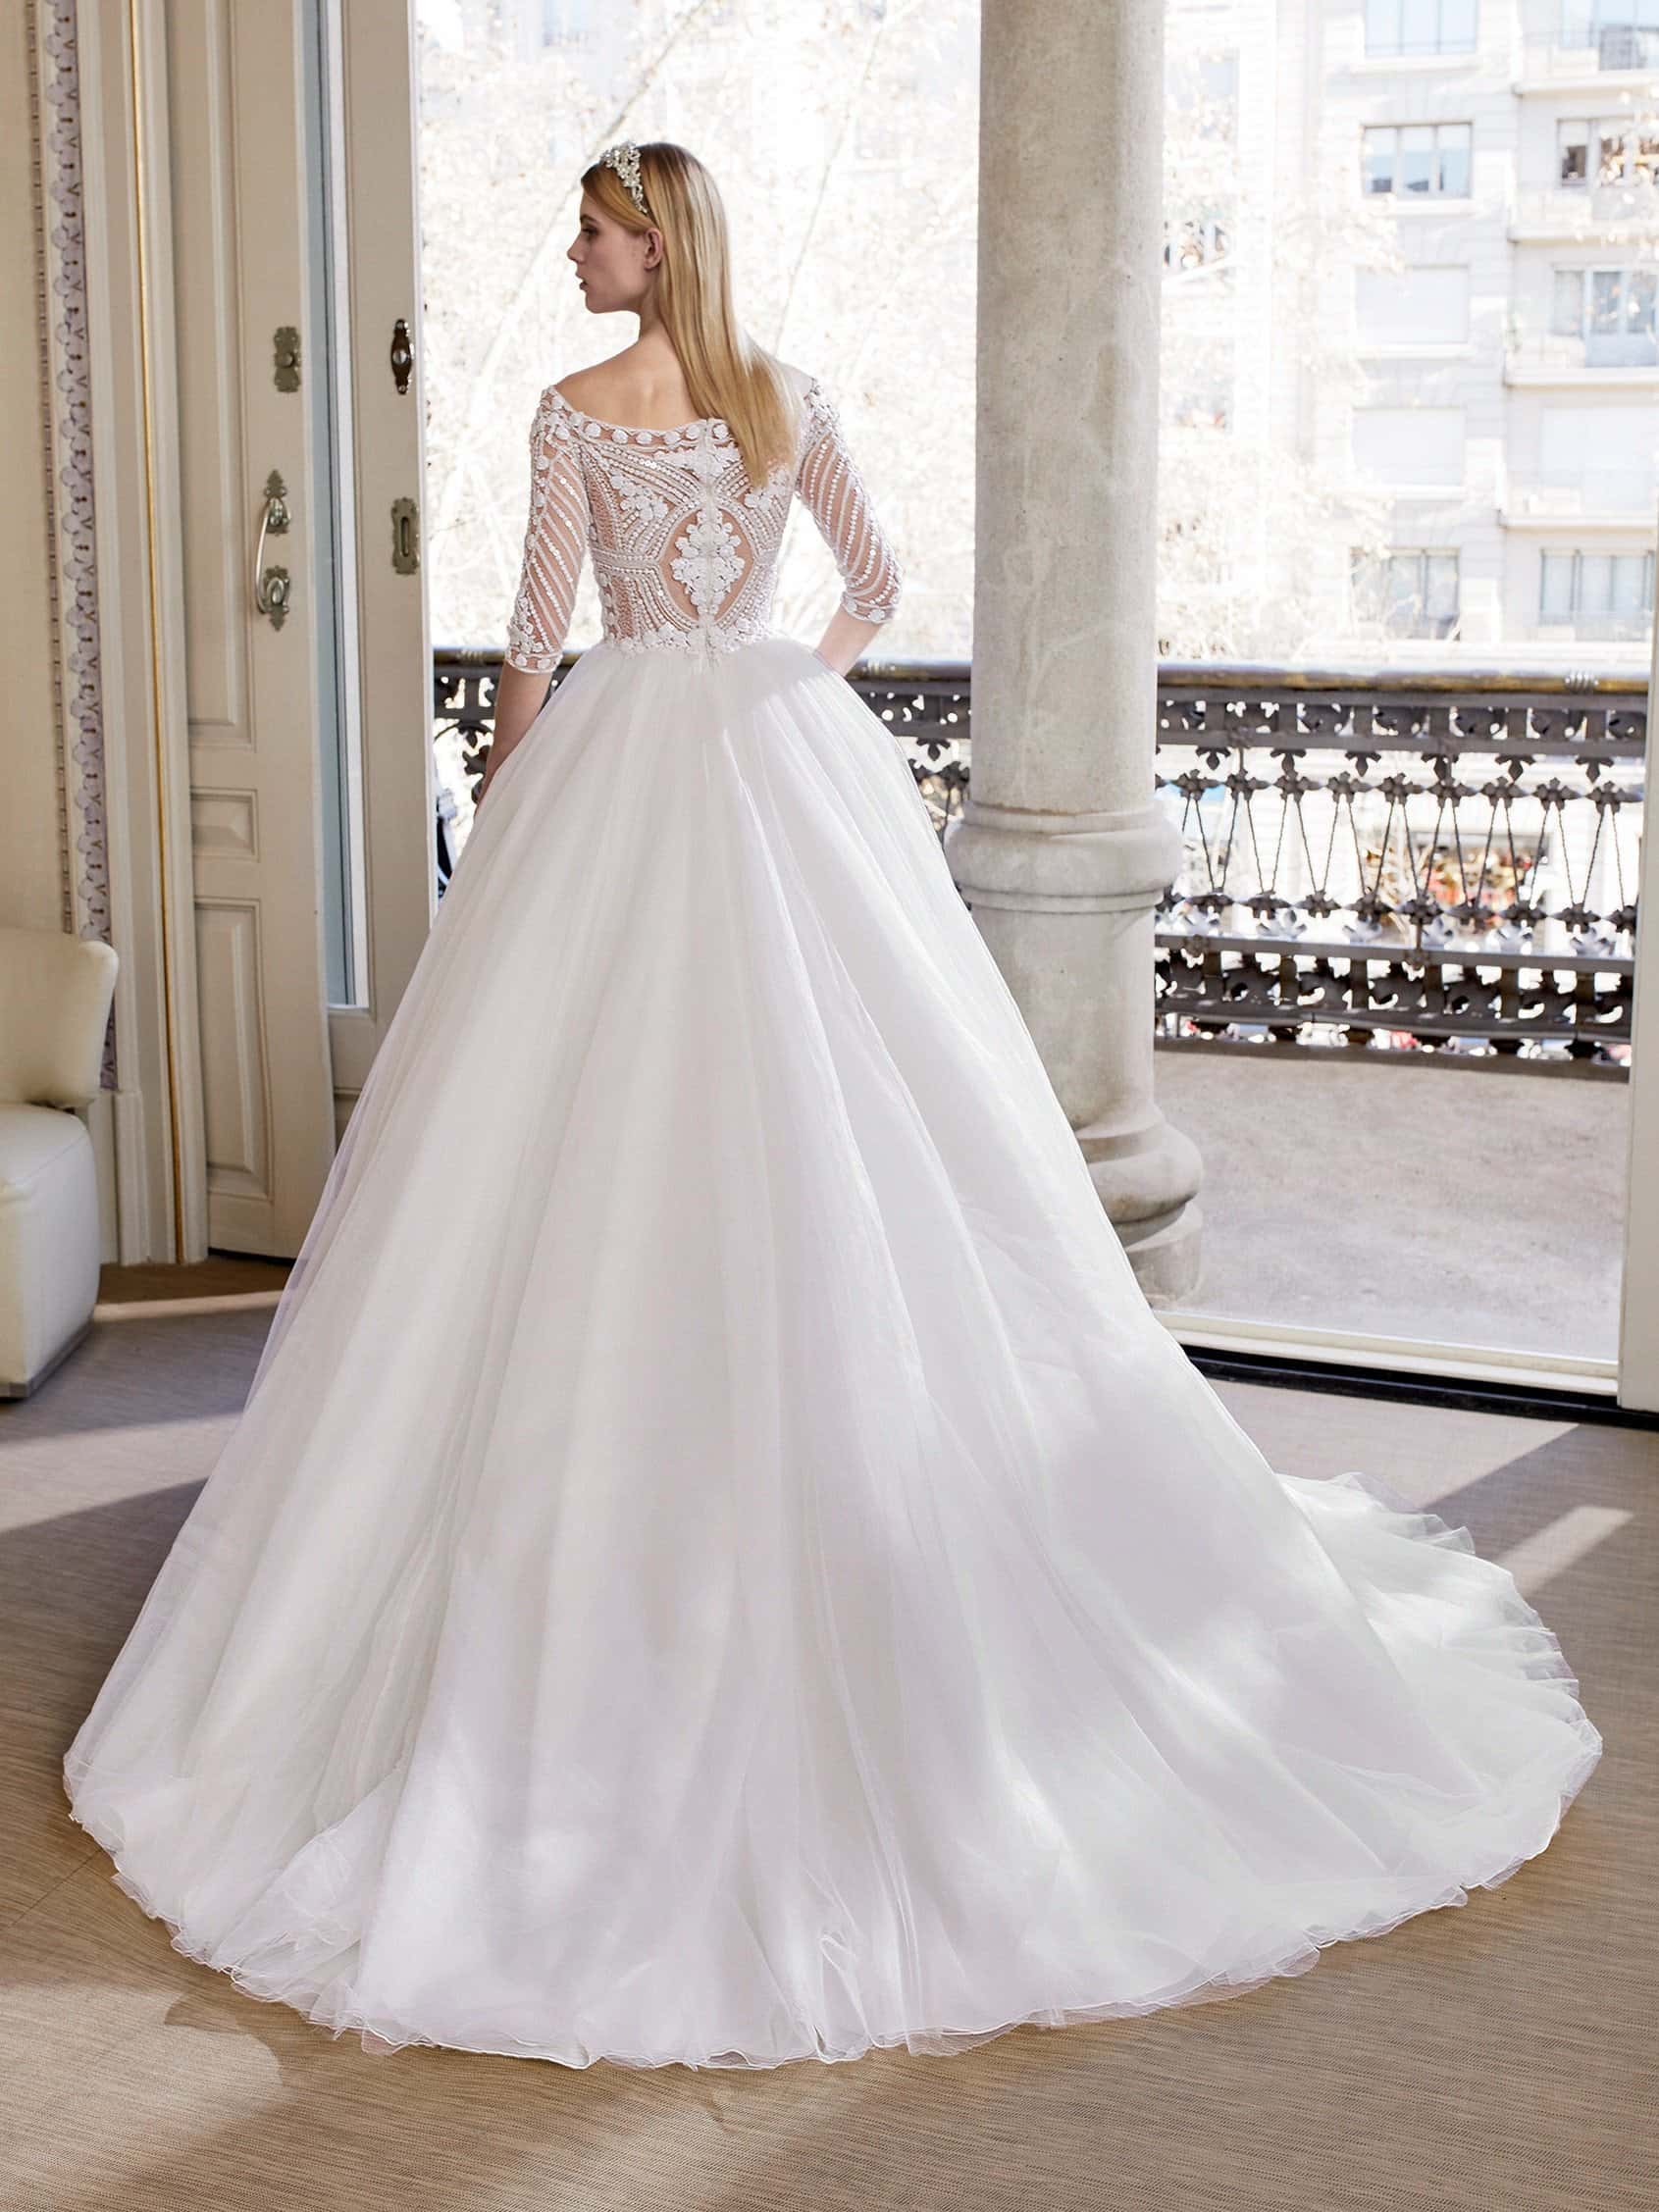 Stunning princess wedding gown